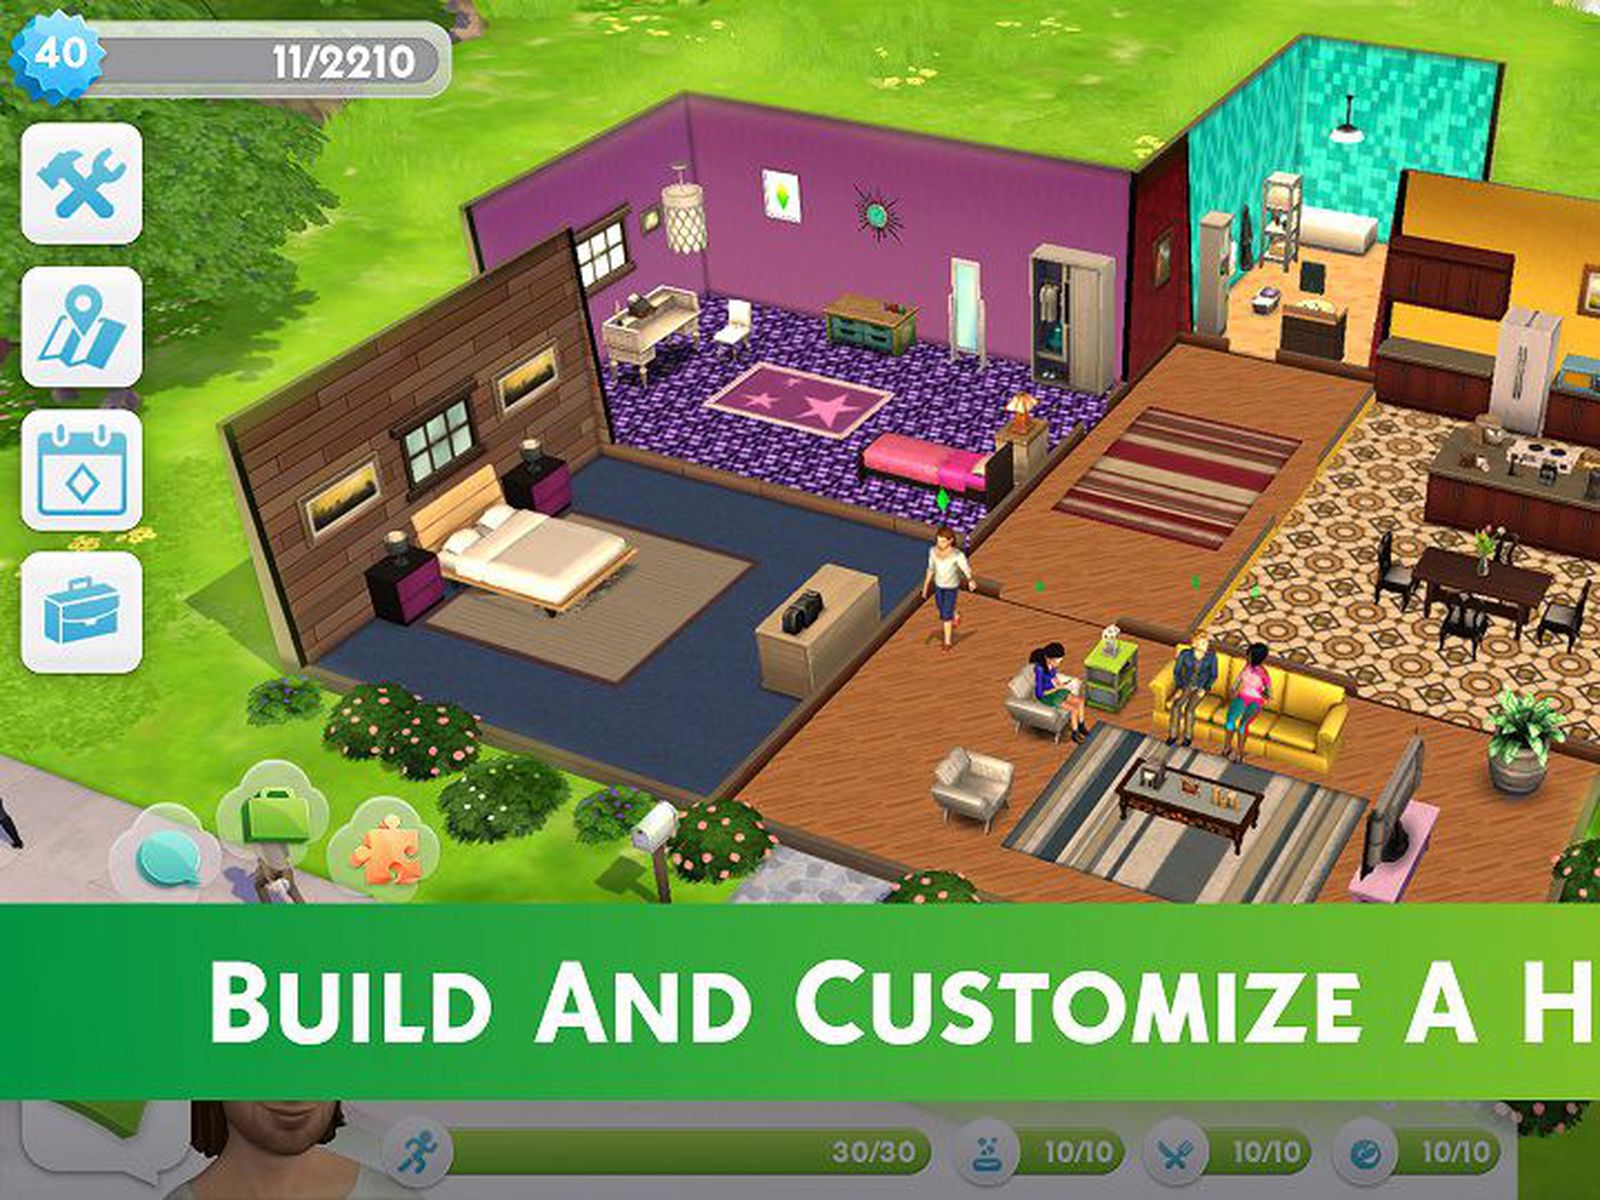 EA Announces 'The Sims Mobile' Coming Soon to iOS - MacRumors